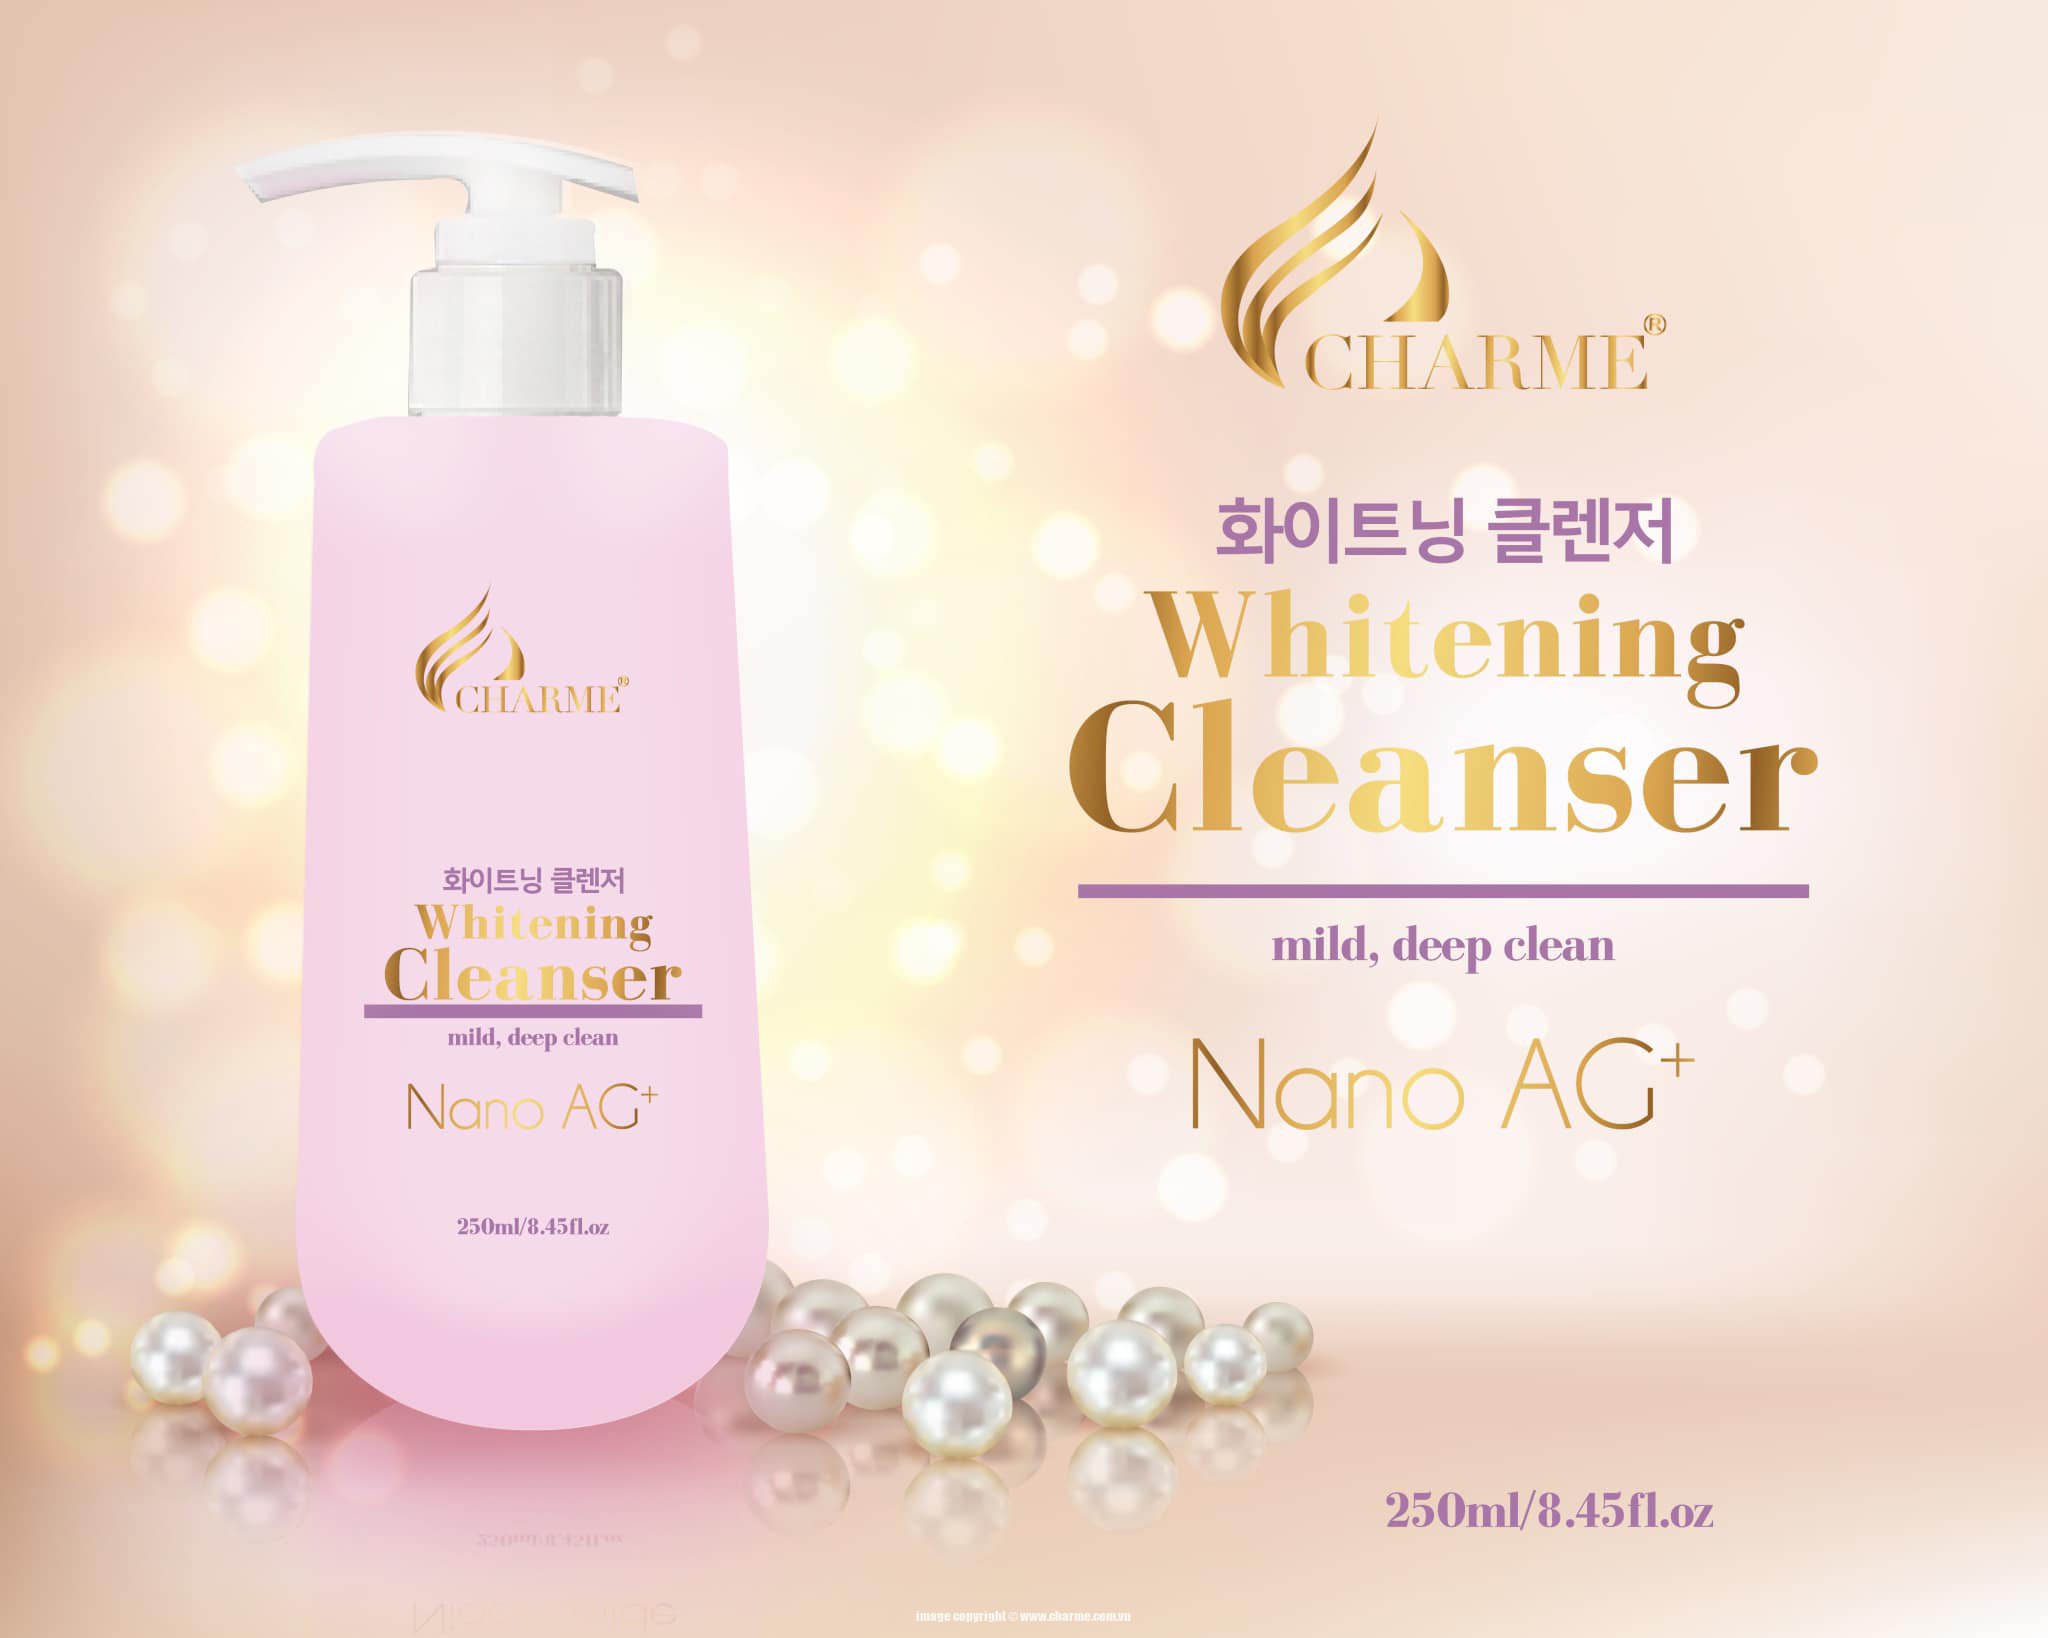 Sữa Tắm Charme Whitening Cleanser Ag+ Hàn Quốc 250ml